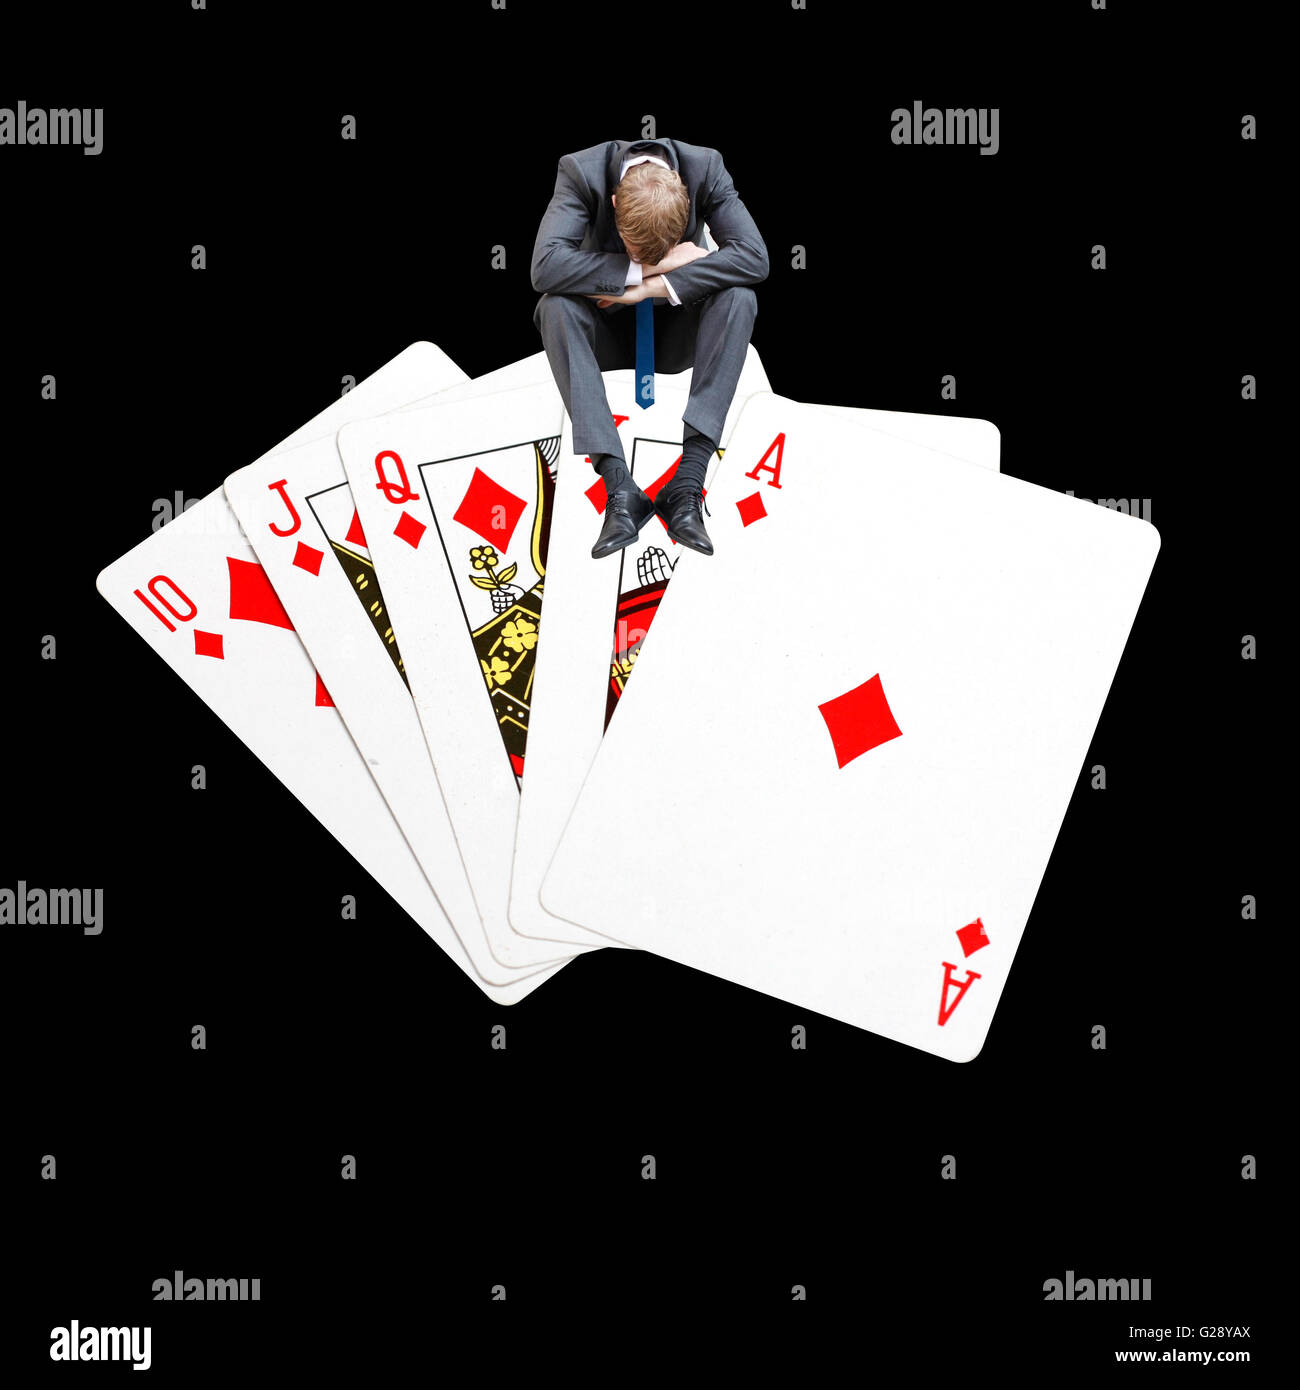 Gambling on a perfect poker hand Stock Photo